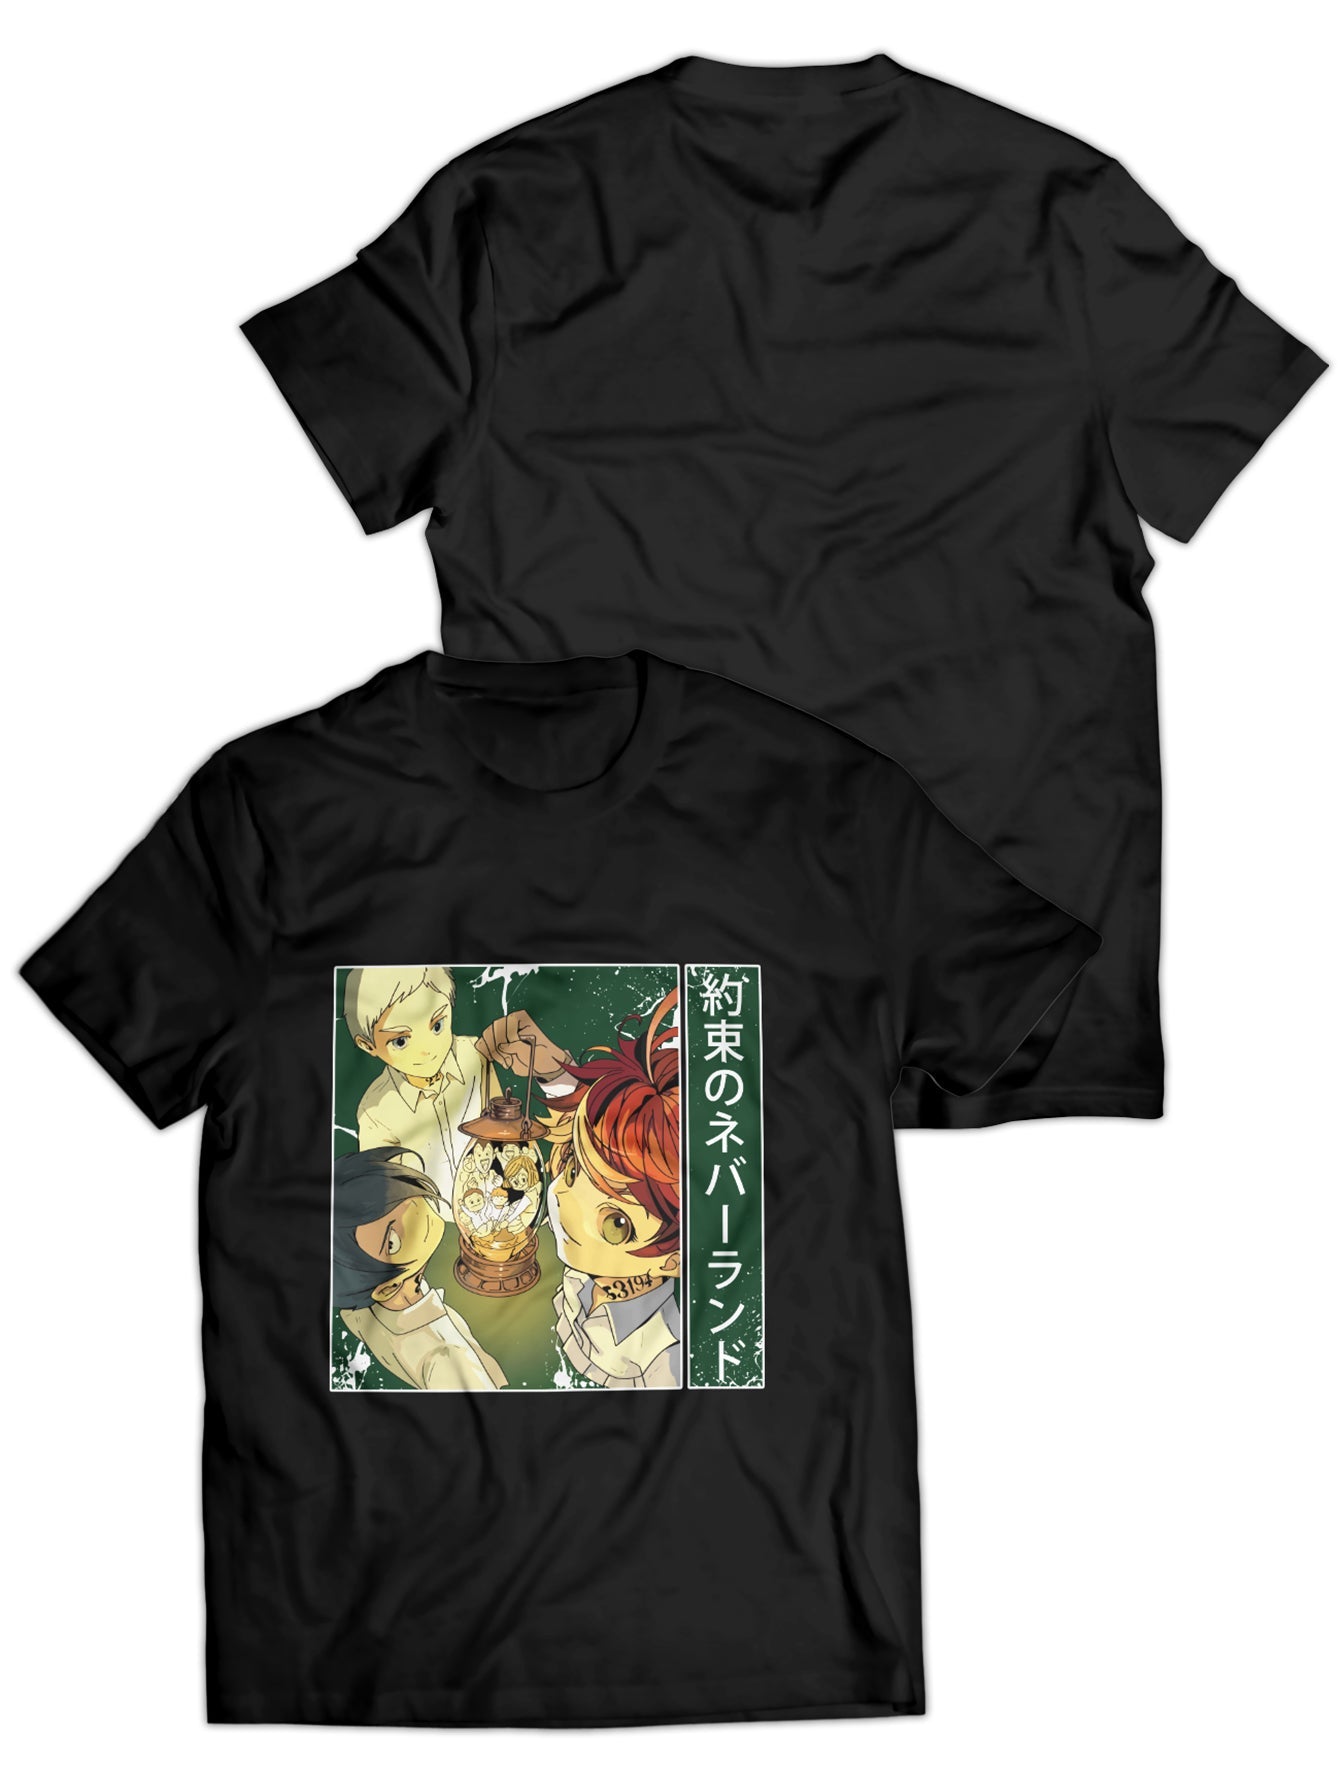 Fandomaniax - The Promised Neverland Unisex T-Shirt